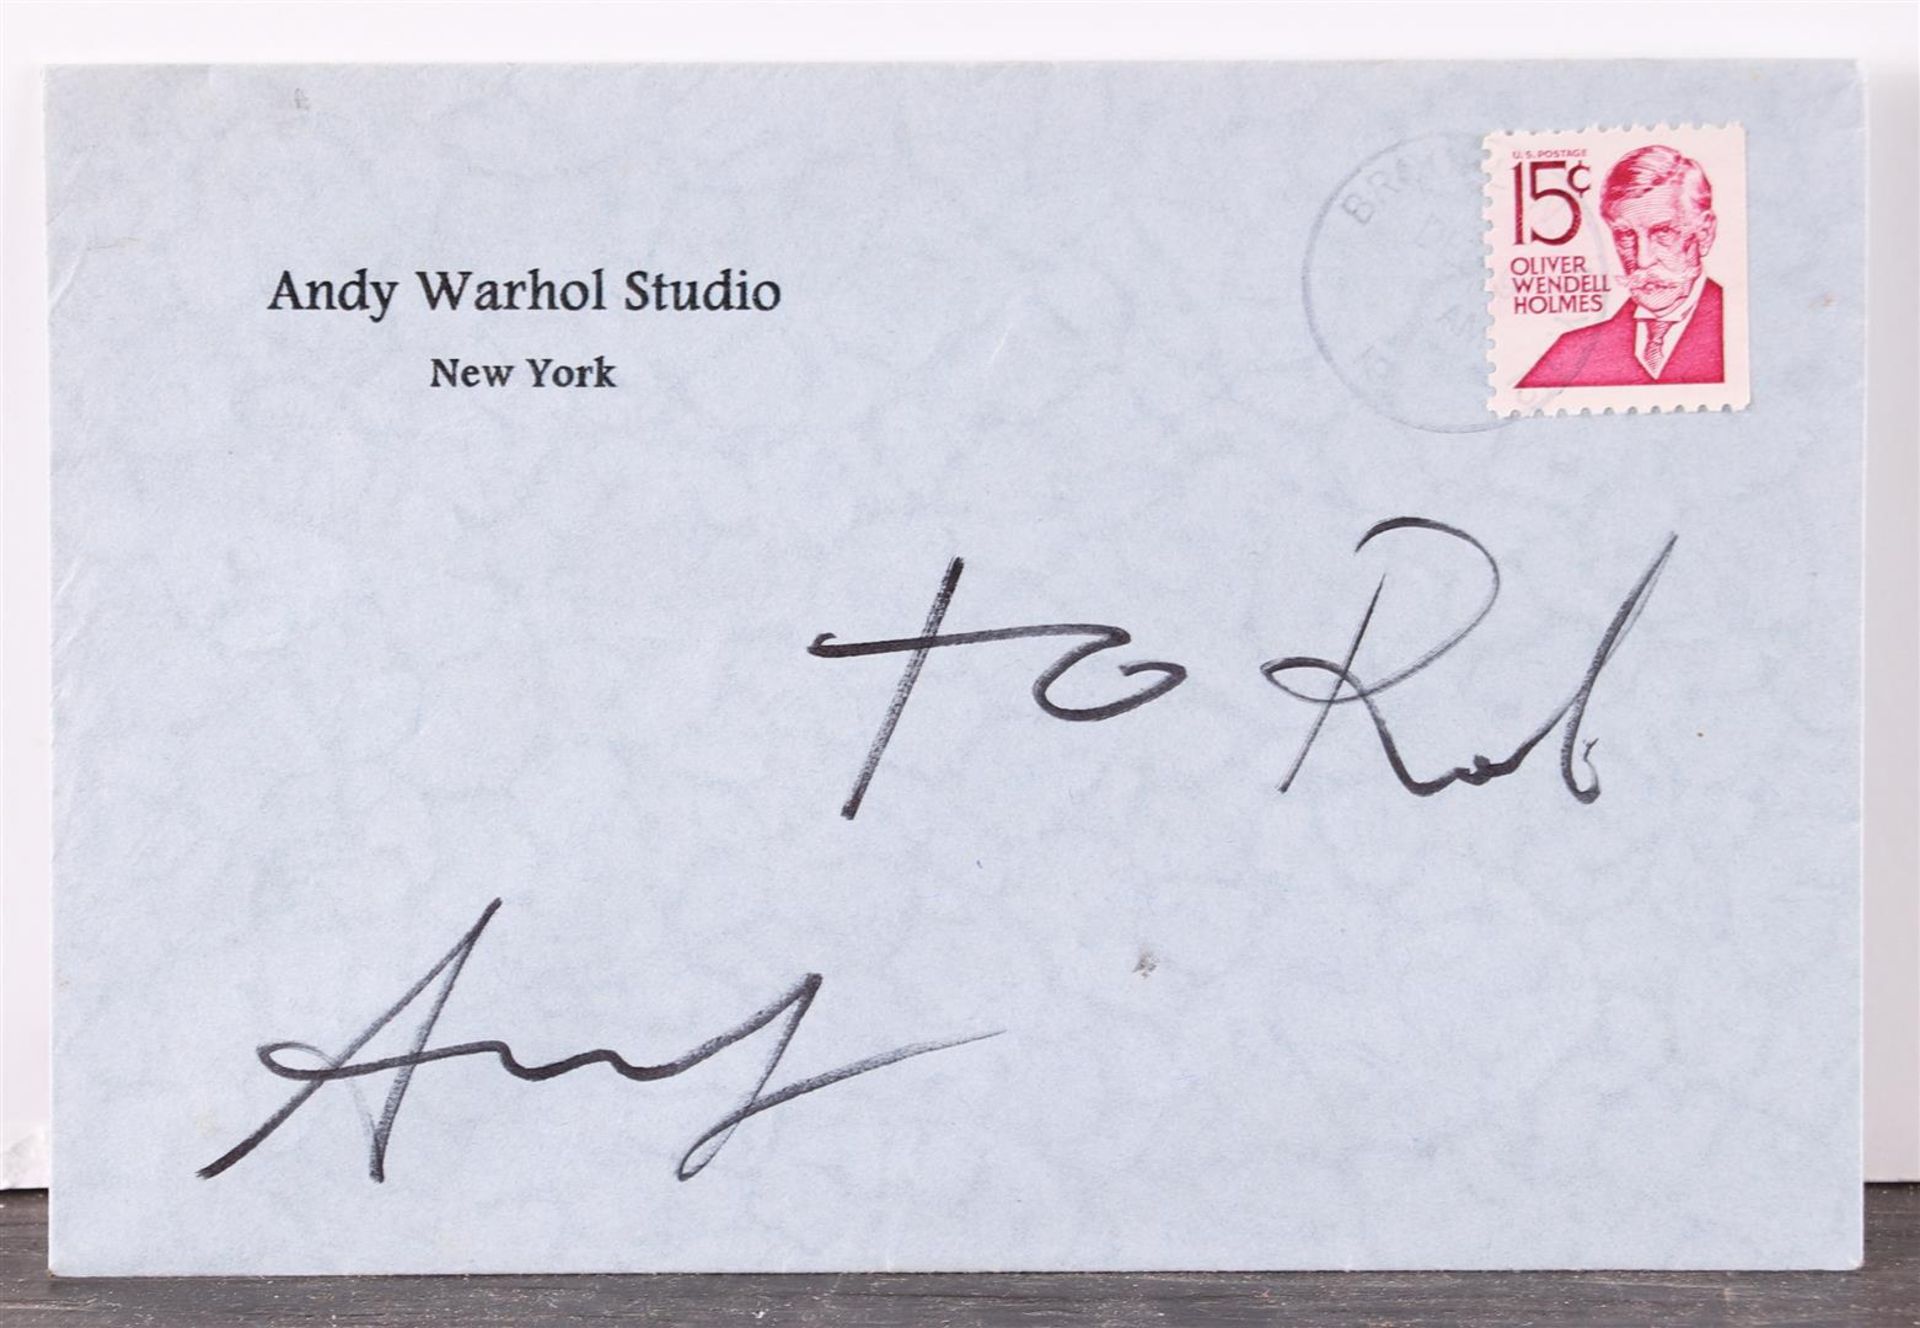 Andy Warhol (Pittsburgh, Pennsylvania, 1928 - 1987New York Presbyterian),(attributed to), Andy Warho